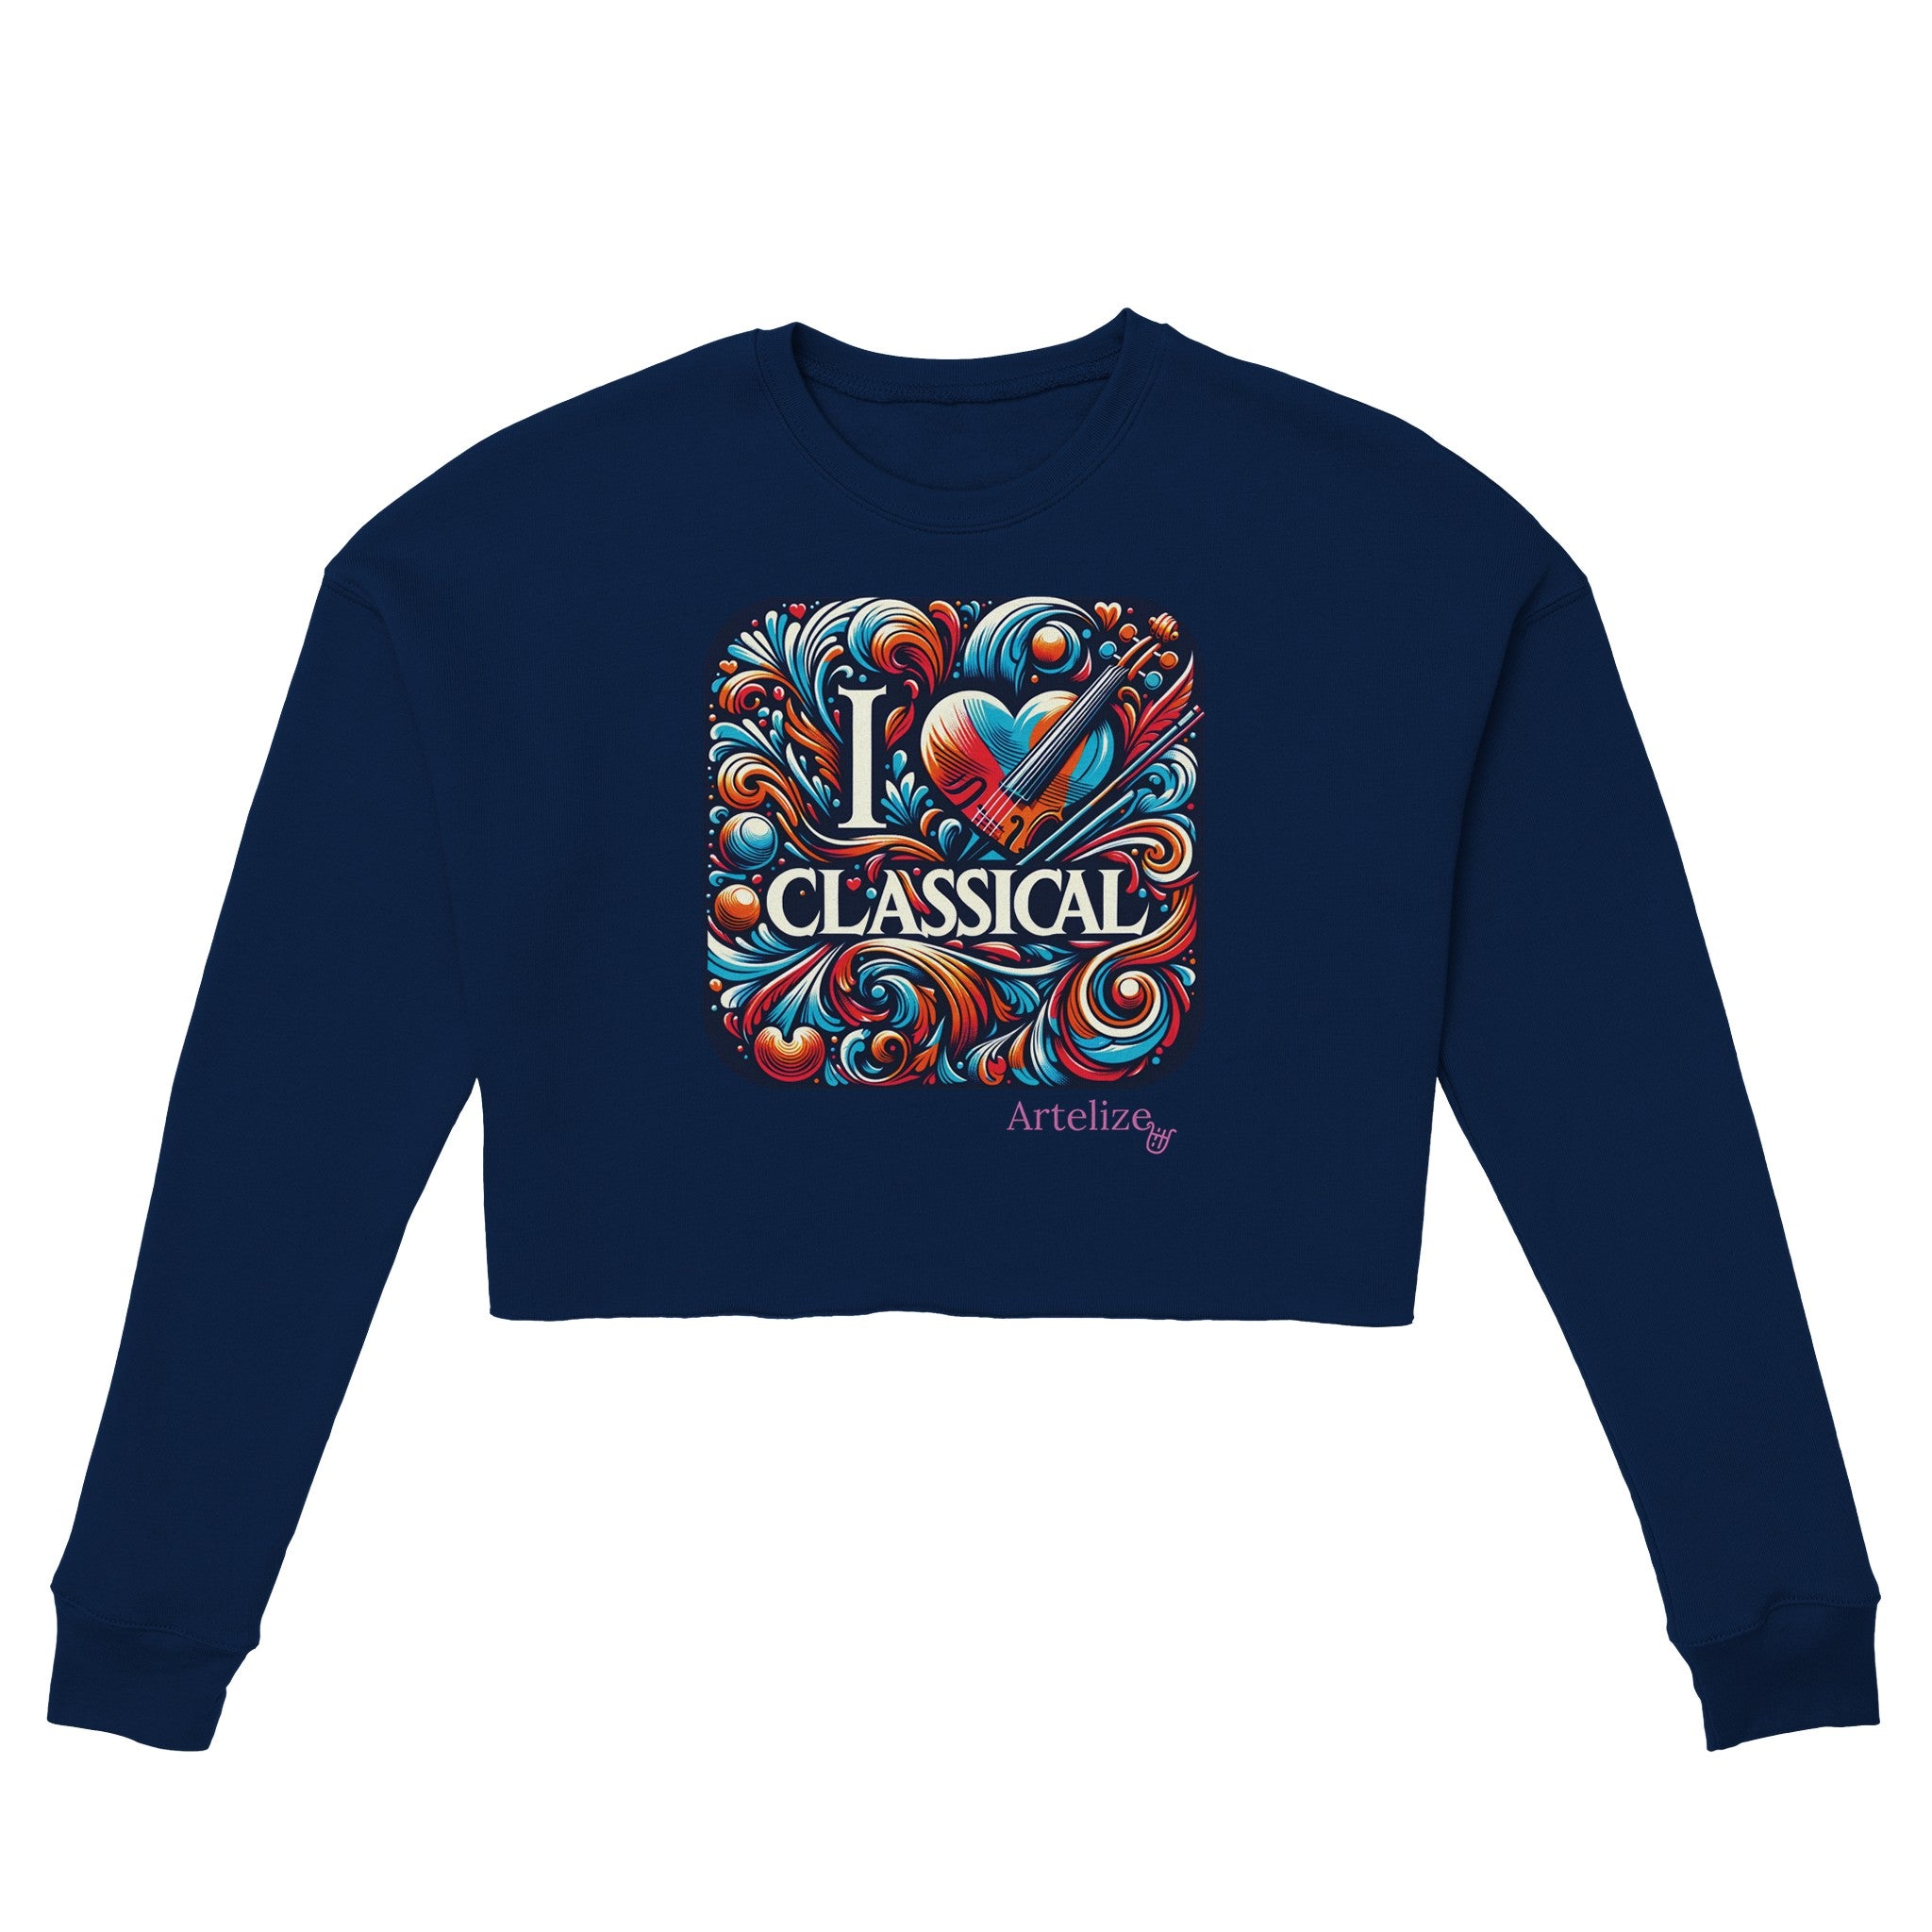 "I LOVE CLASSICAL" Women's Cropped Sweatshirt | Bella + Canvas 7503